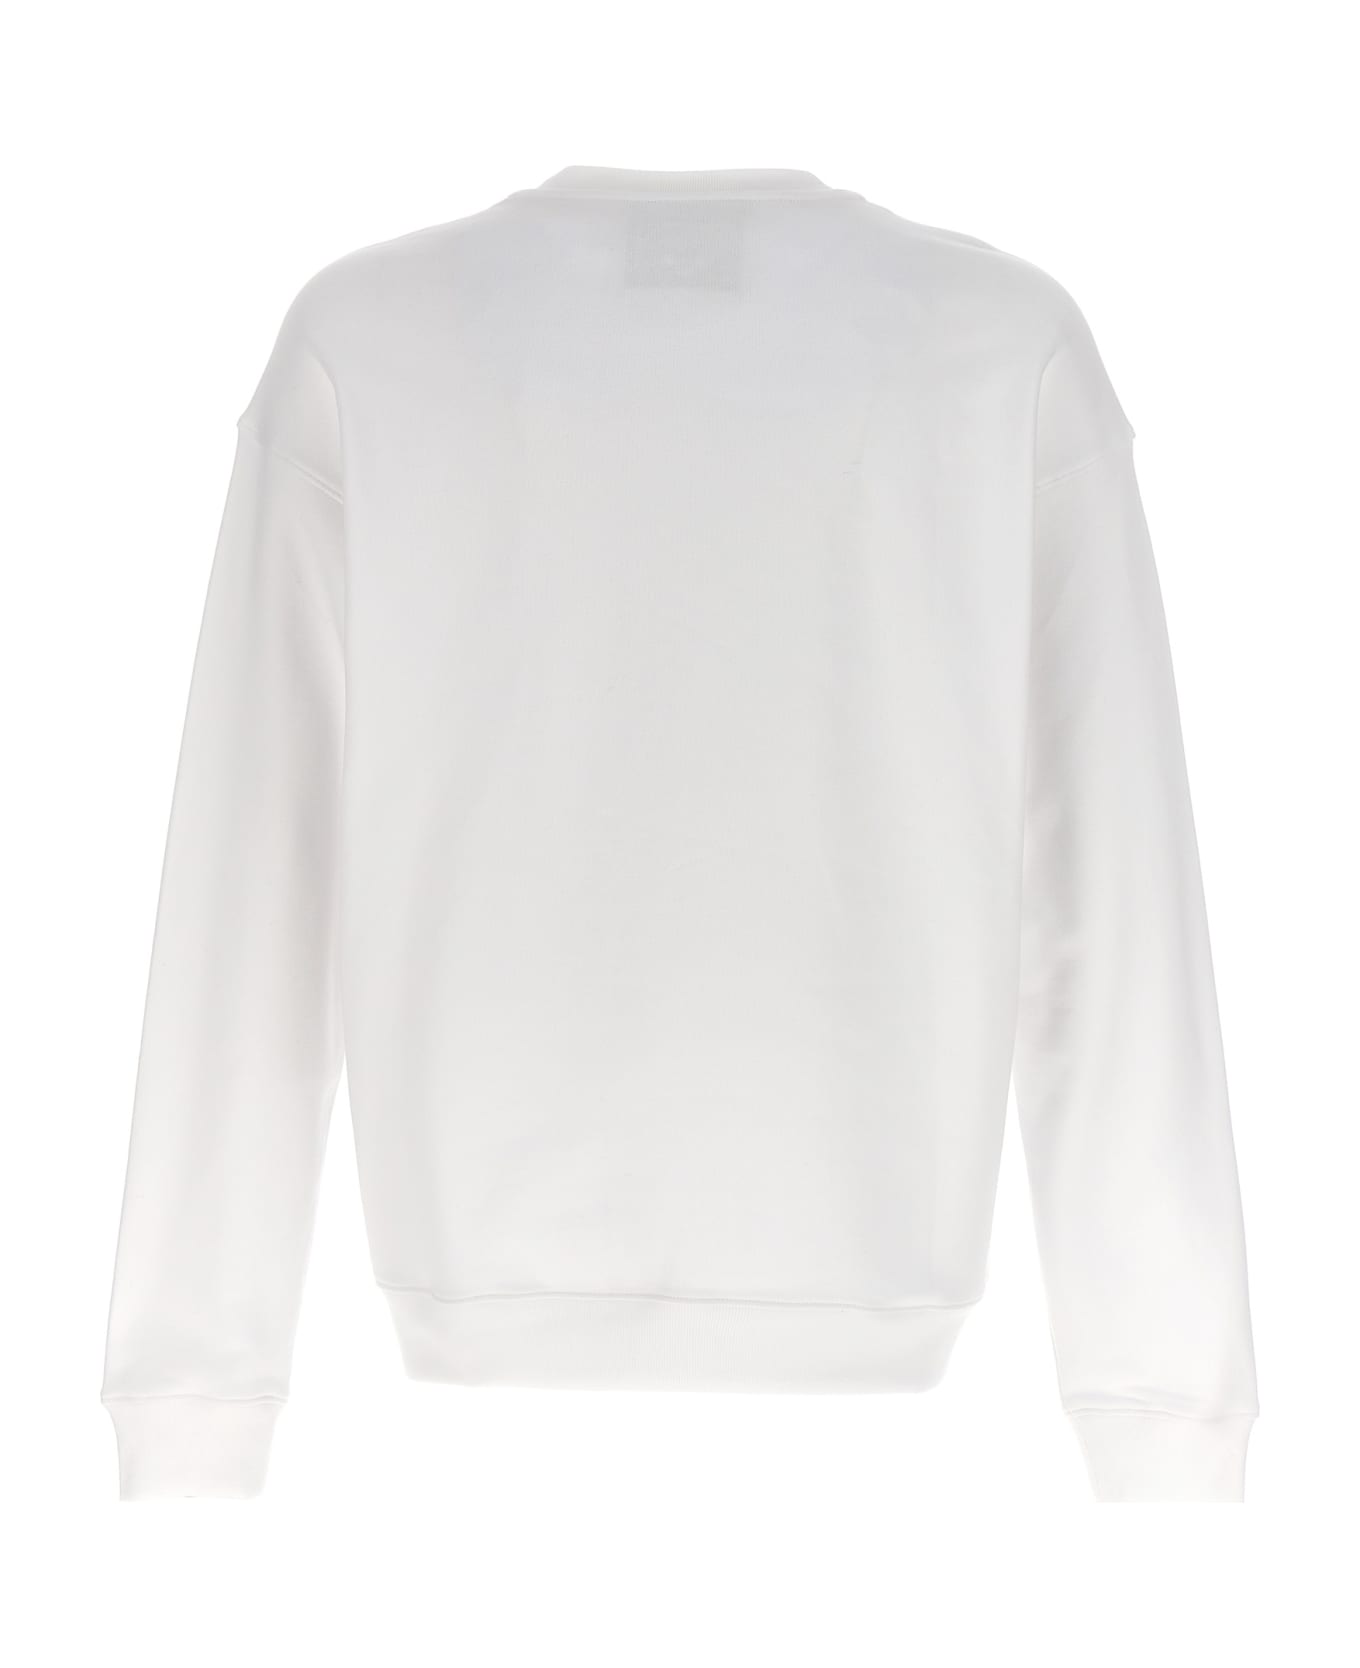 Moschino 'teddy' Sweatshirt - White/Black フリース